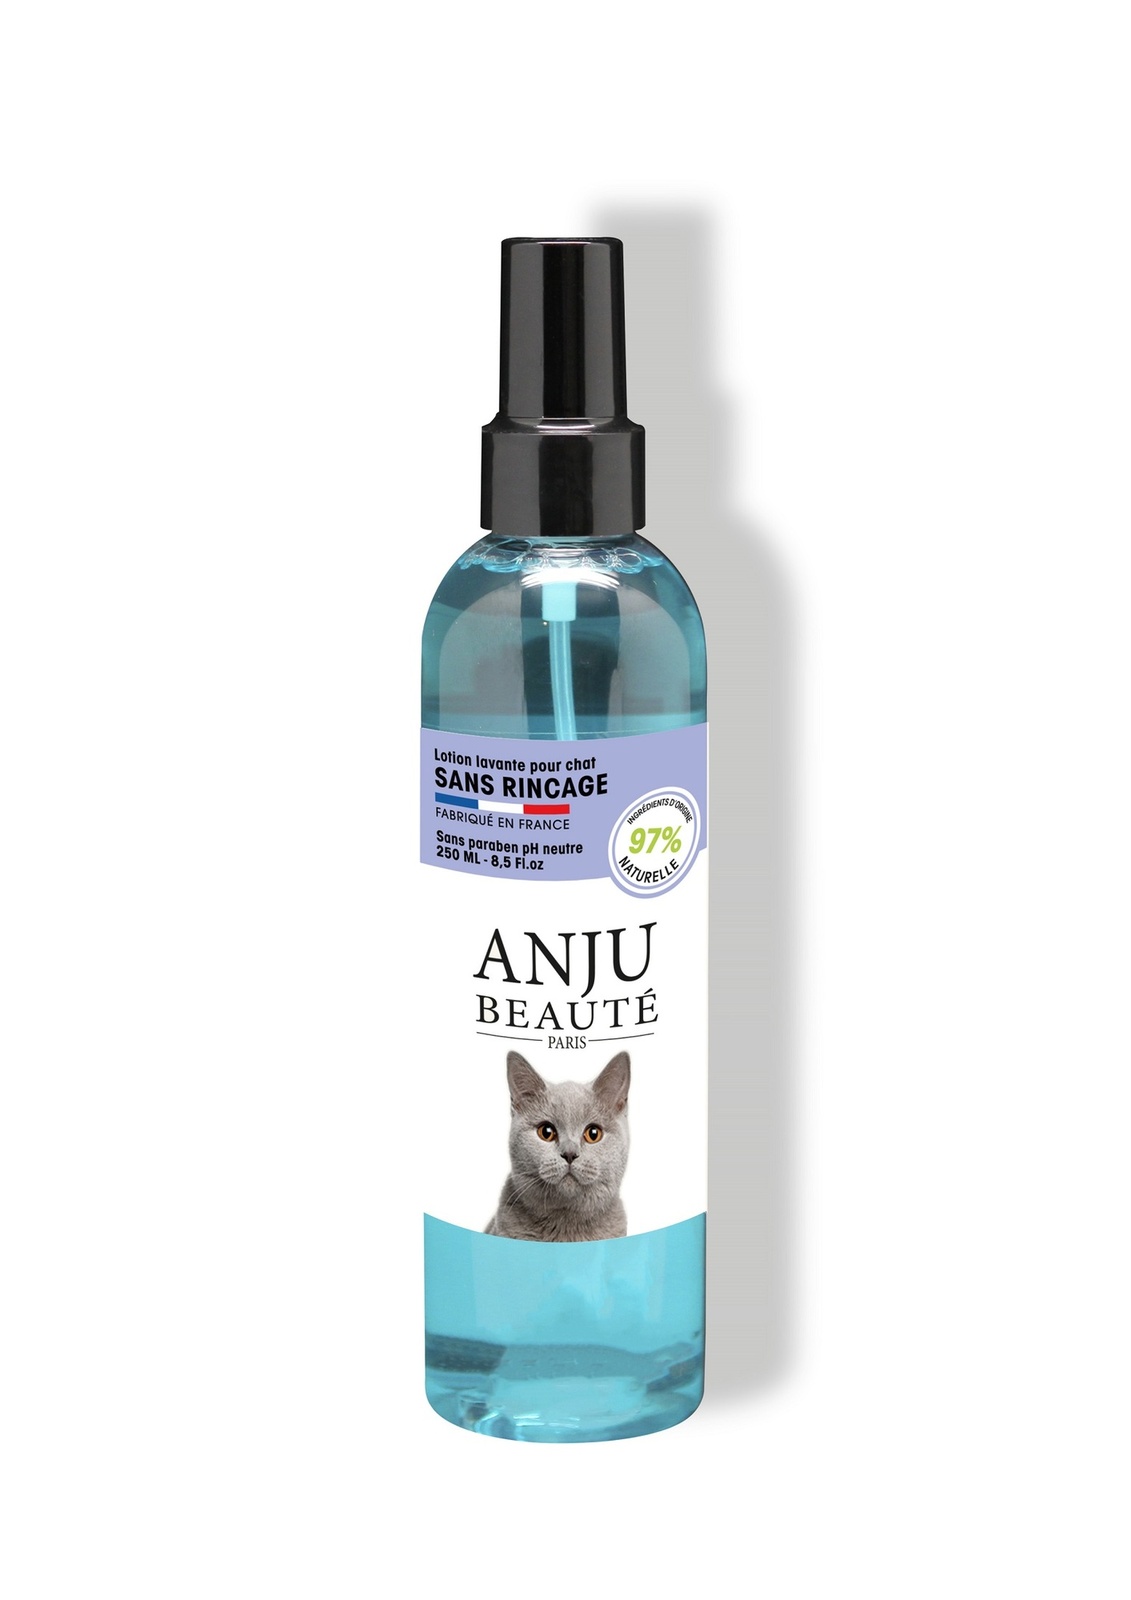 Anju Beaute Anju Beaute очищающий спрей для кошек без ополаскивания, 250 мл (250 г) anju beaute anju beaute очищаяющий спрей для кошек без ополаскивания 250 мл 250 г